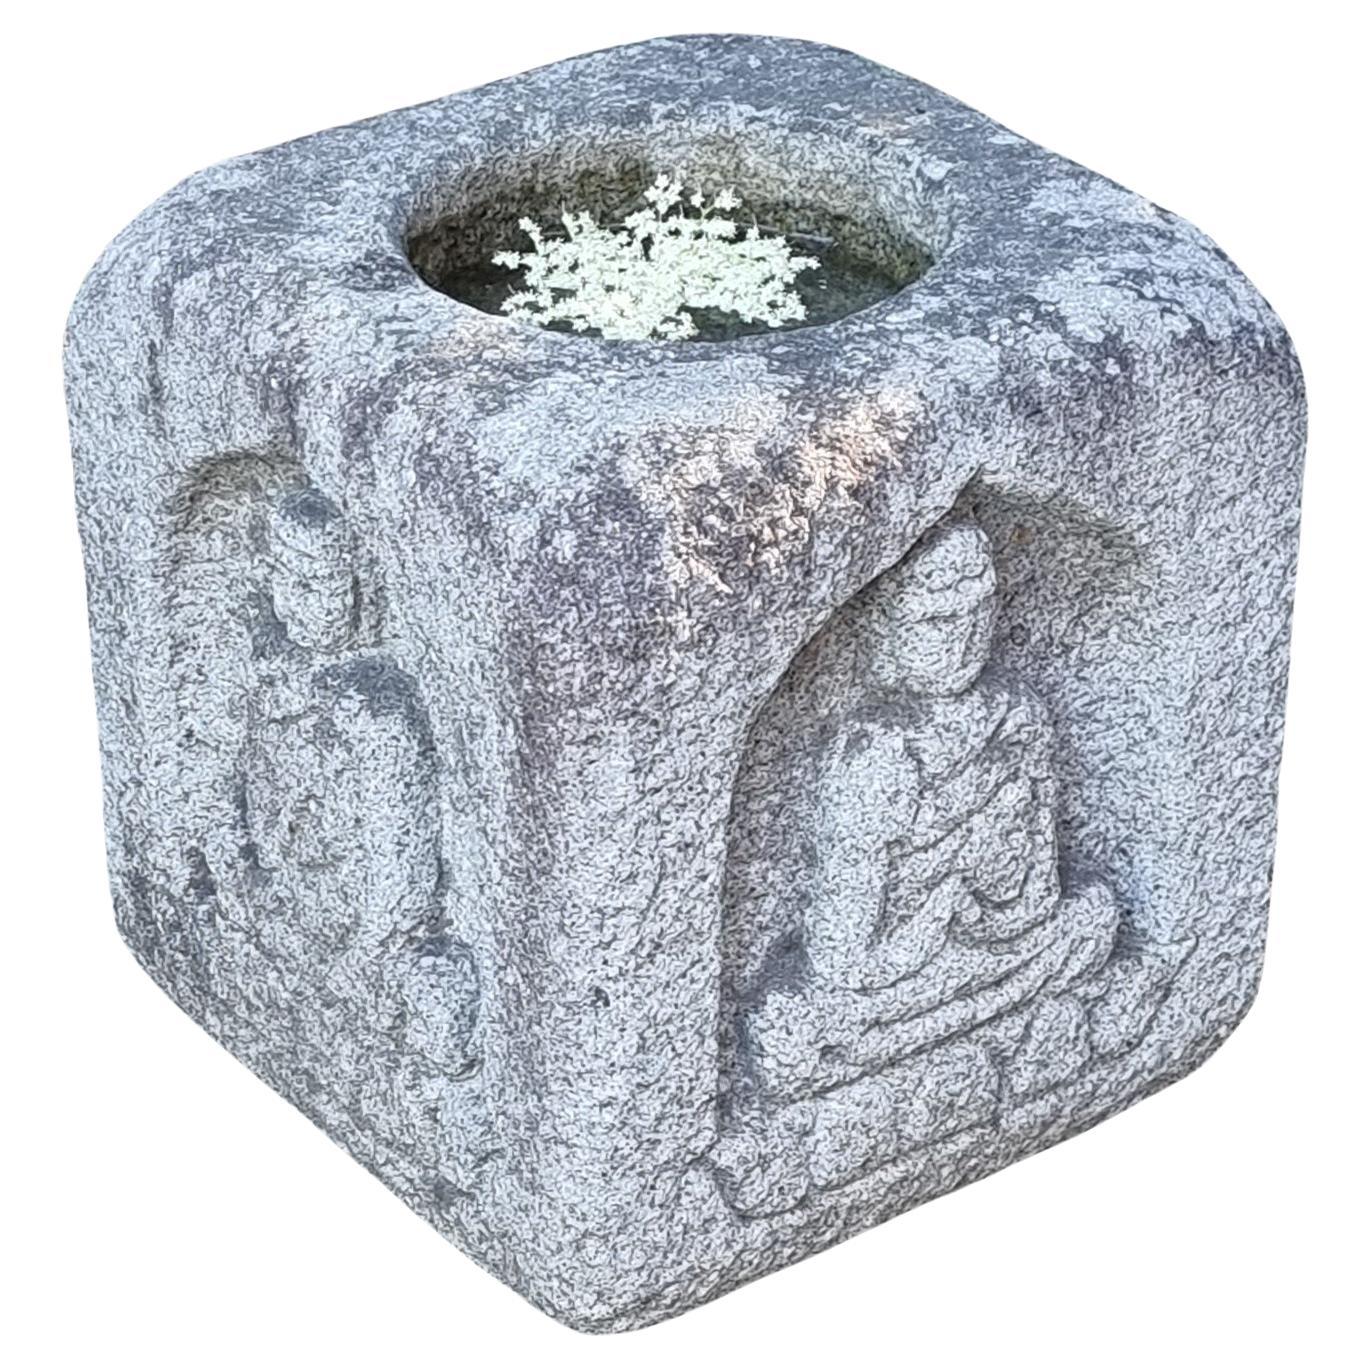 Antique Japanese granite chôzu’bachi 手水鉢 (water basin) with carved Buddha design